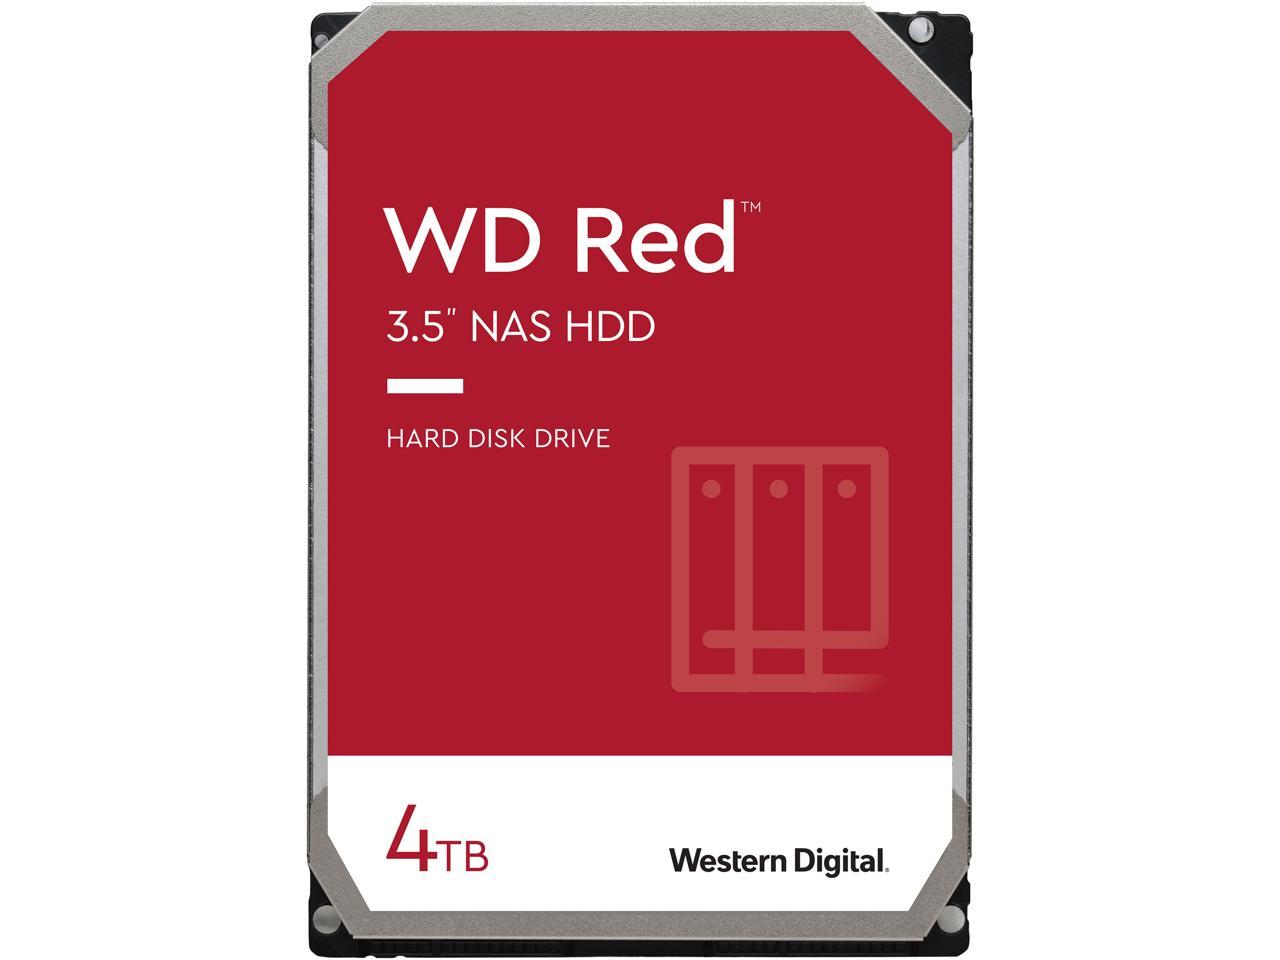 4TB WD Red NAS Hard Drive @Newegg $70